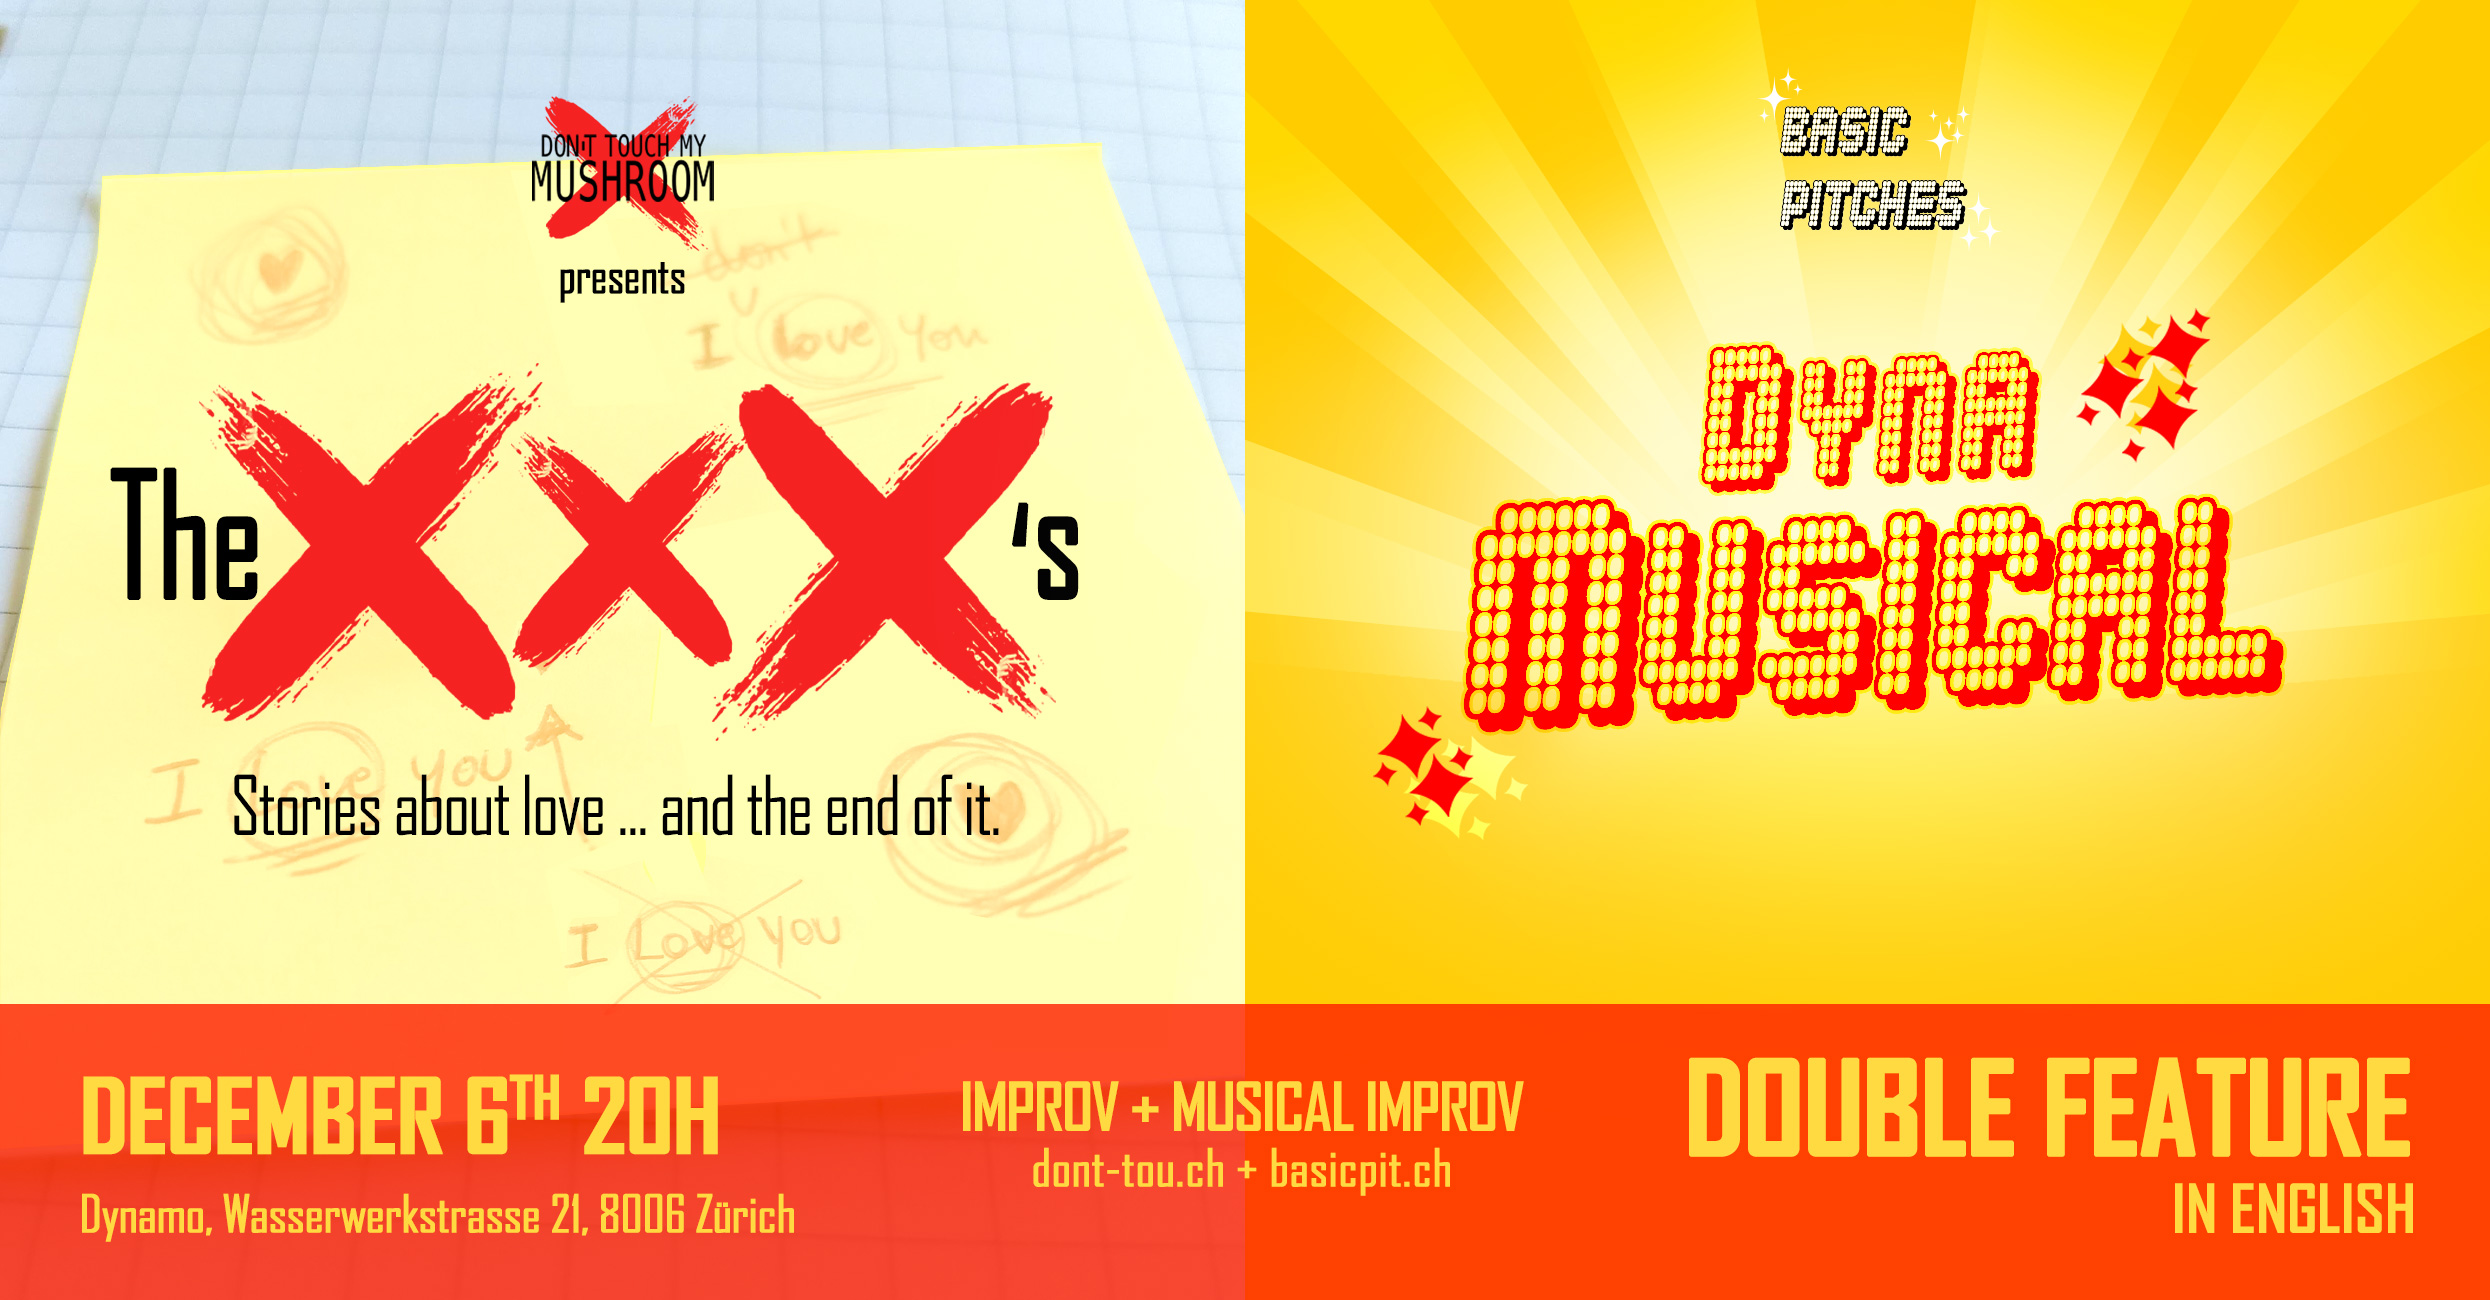 The XxX's + musical @ Dynamo